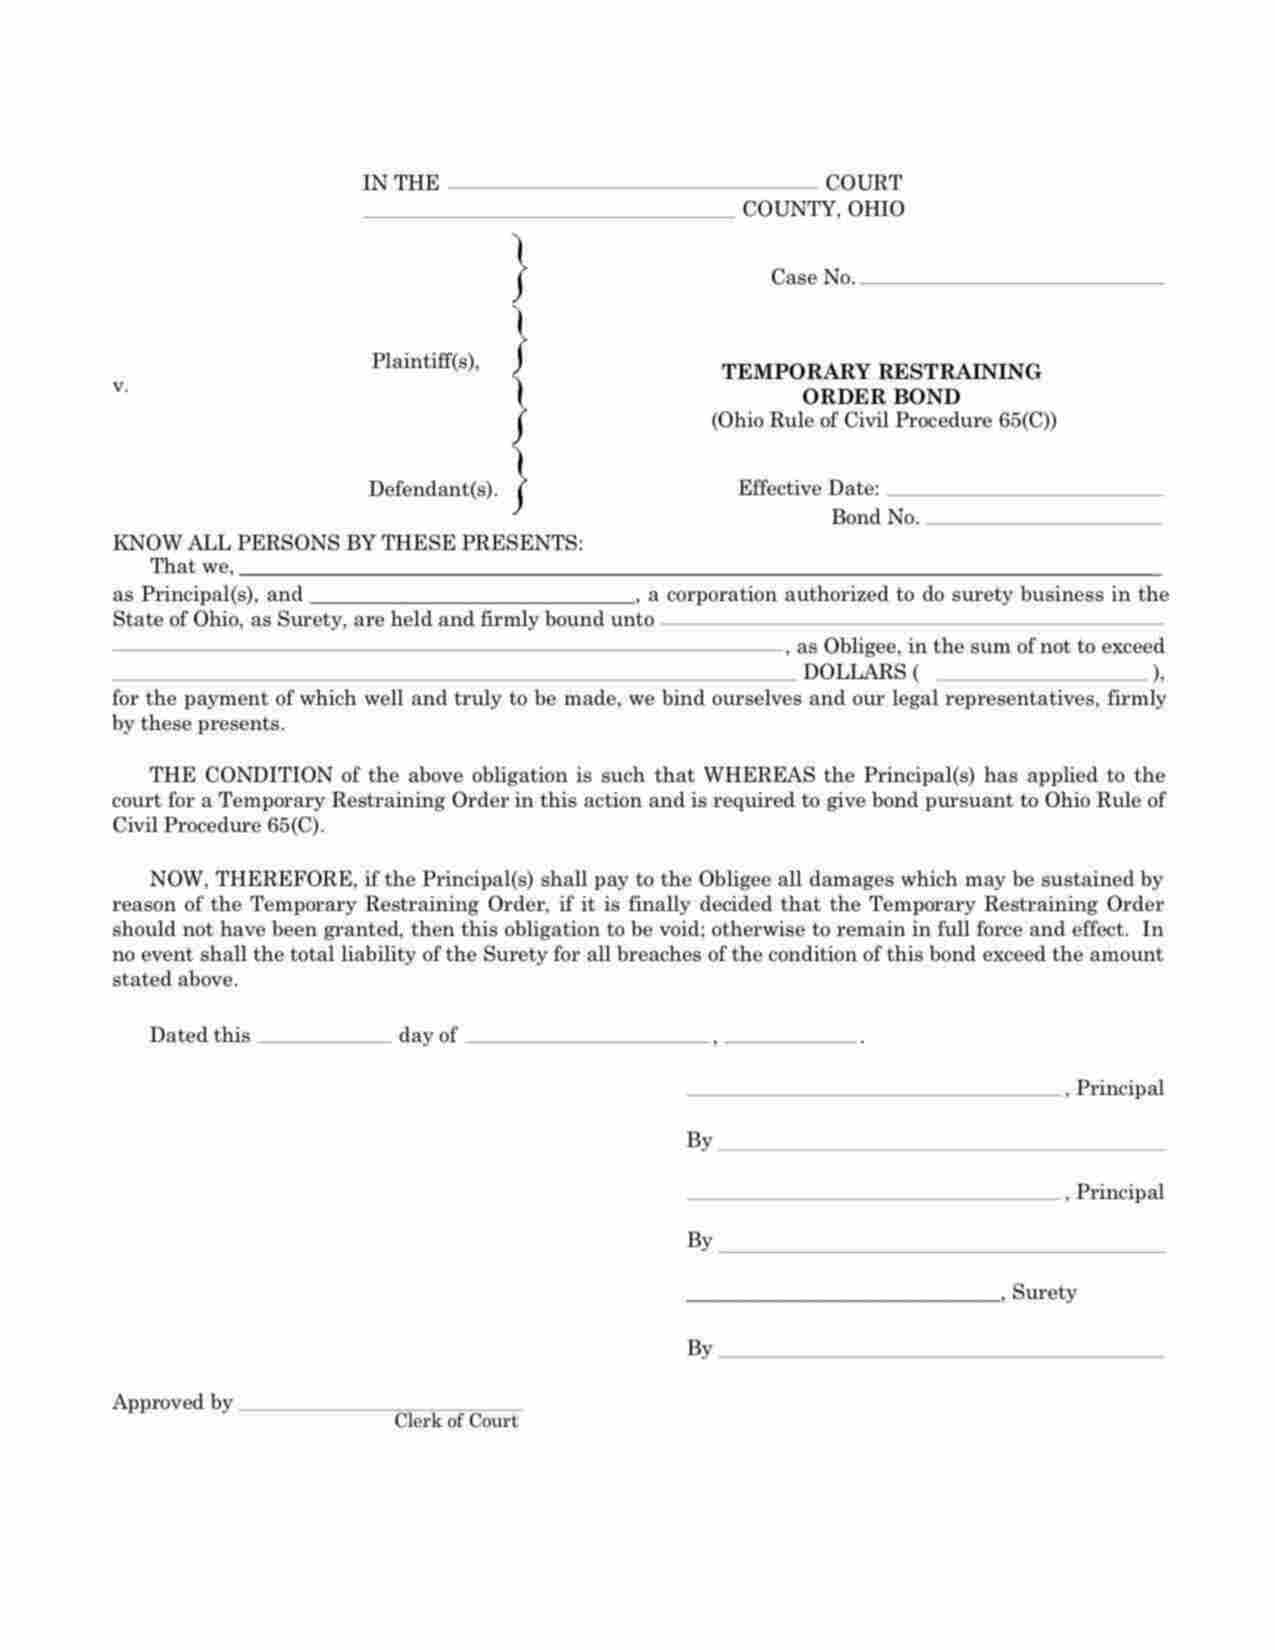 Ohio Temporary Restraining Order Bond Form